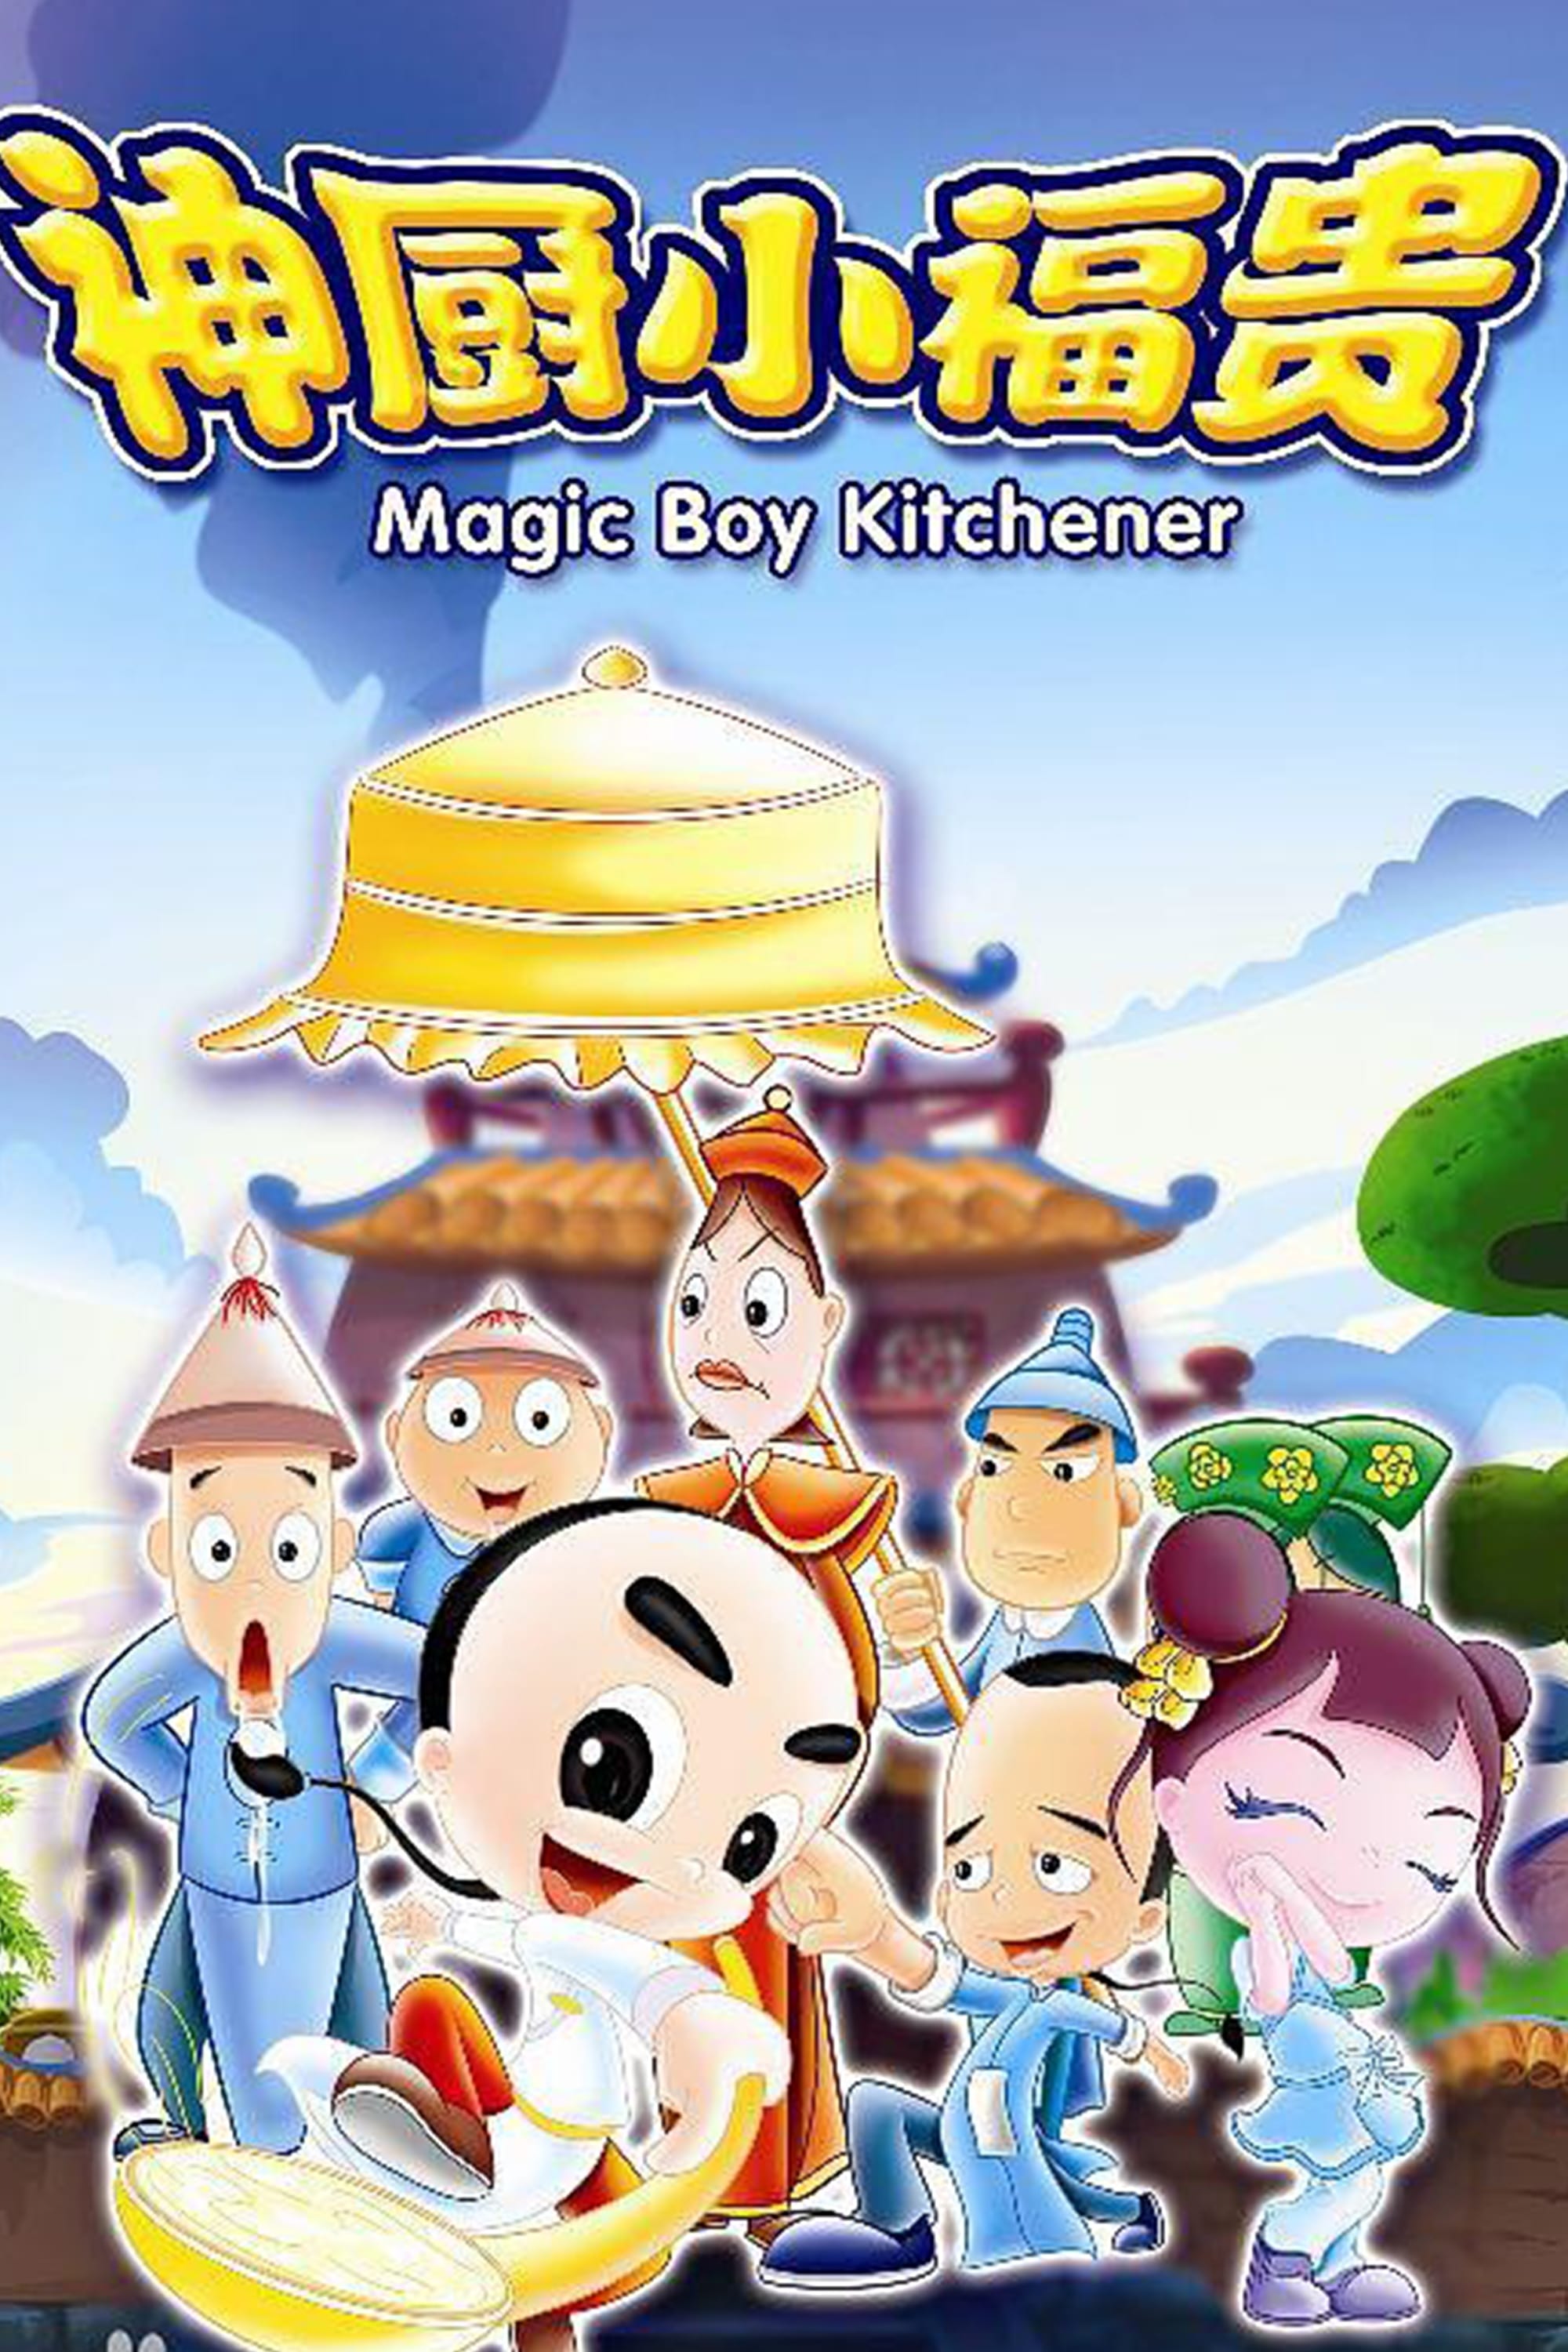 Magic Boy Kitchener